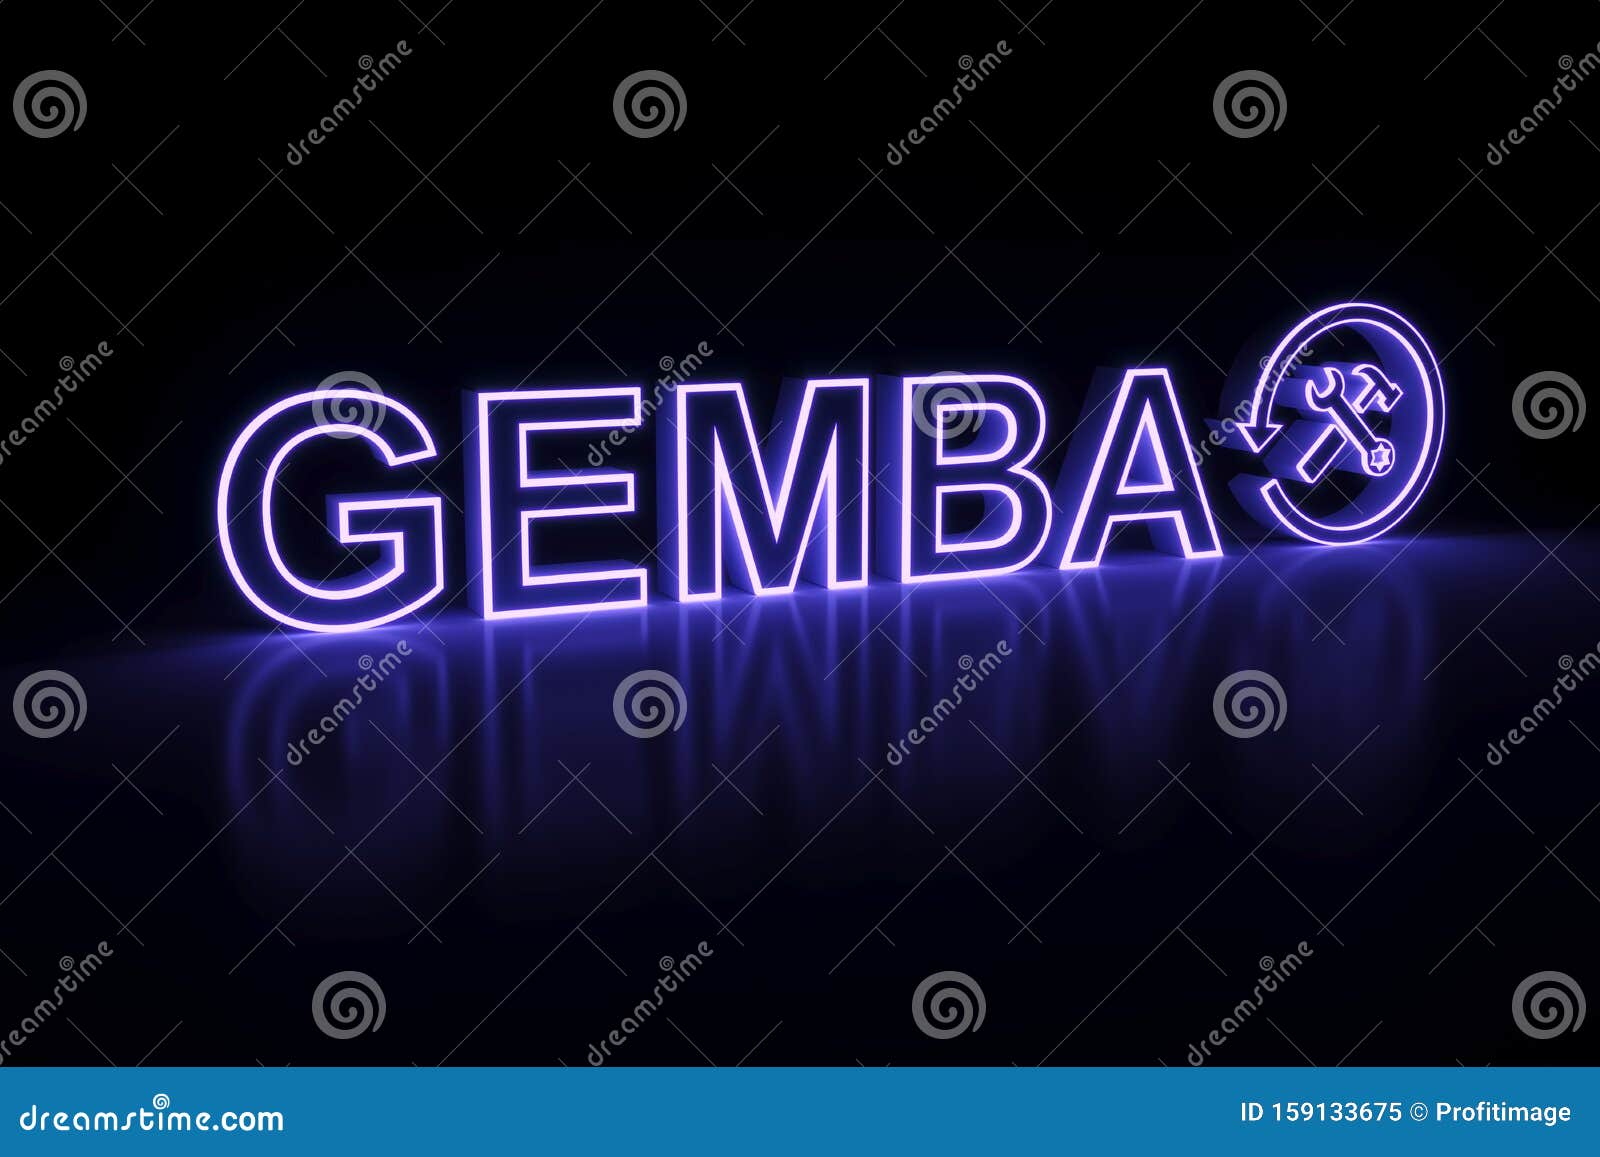 gemba neon concept self illumination background